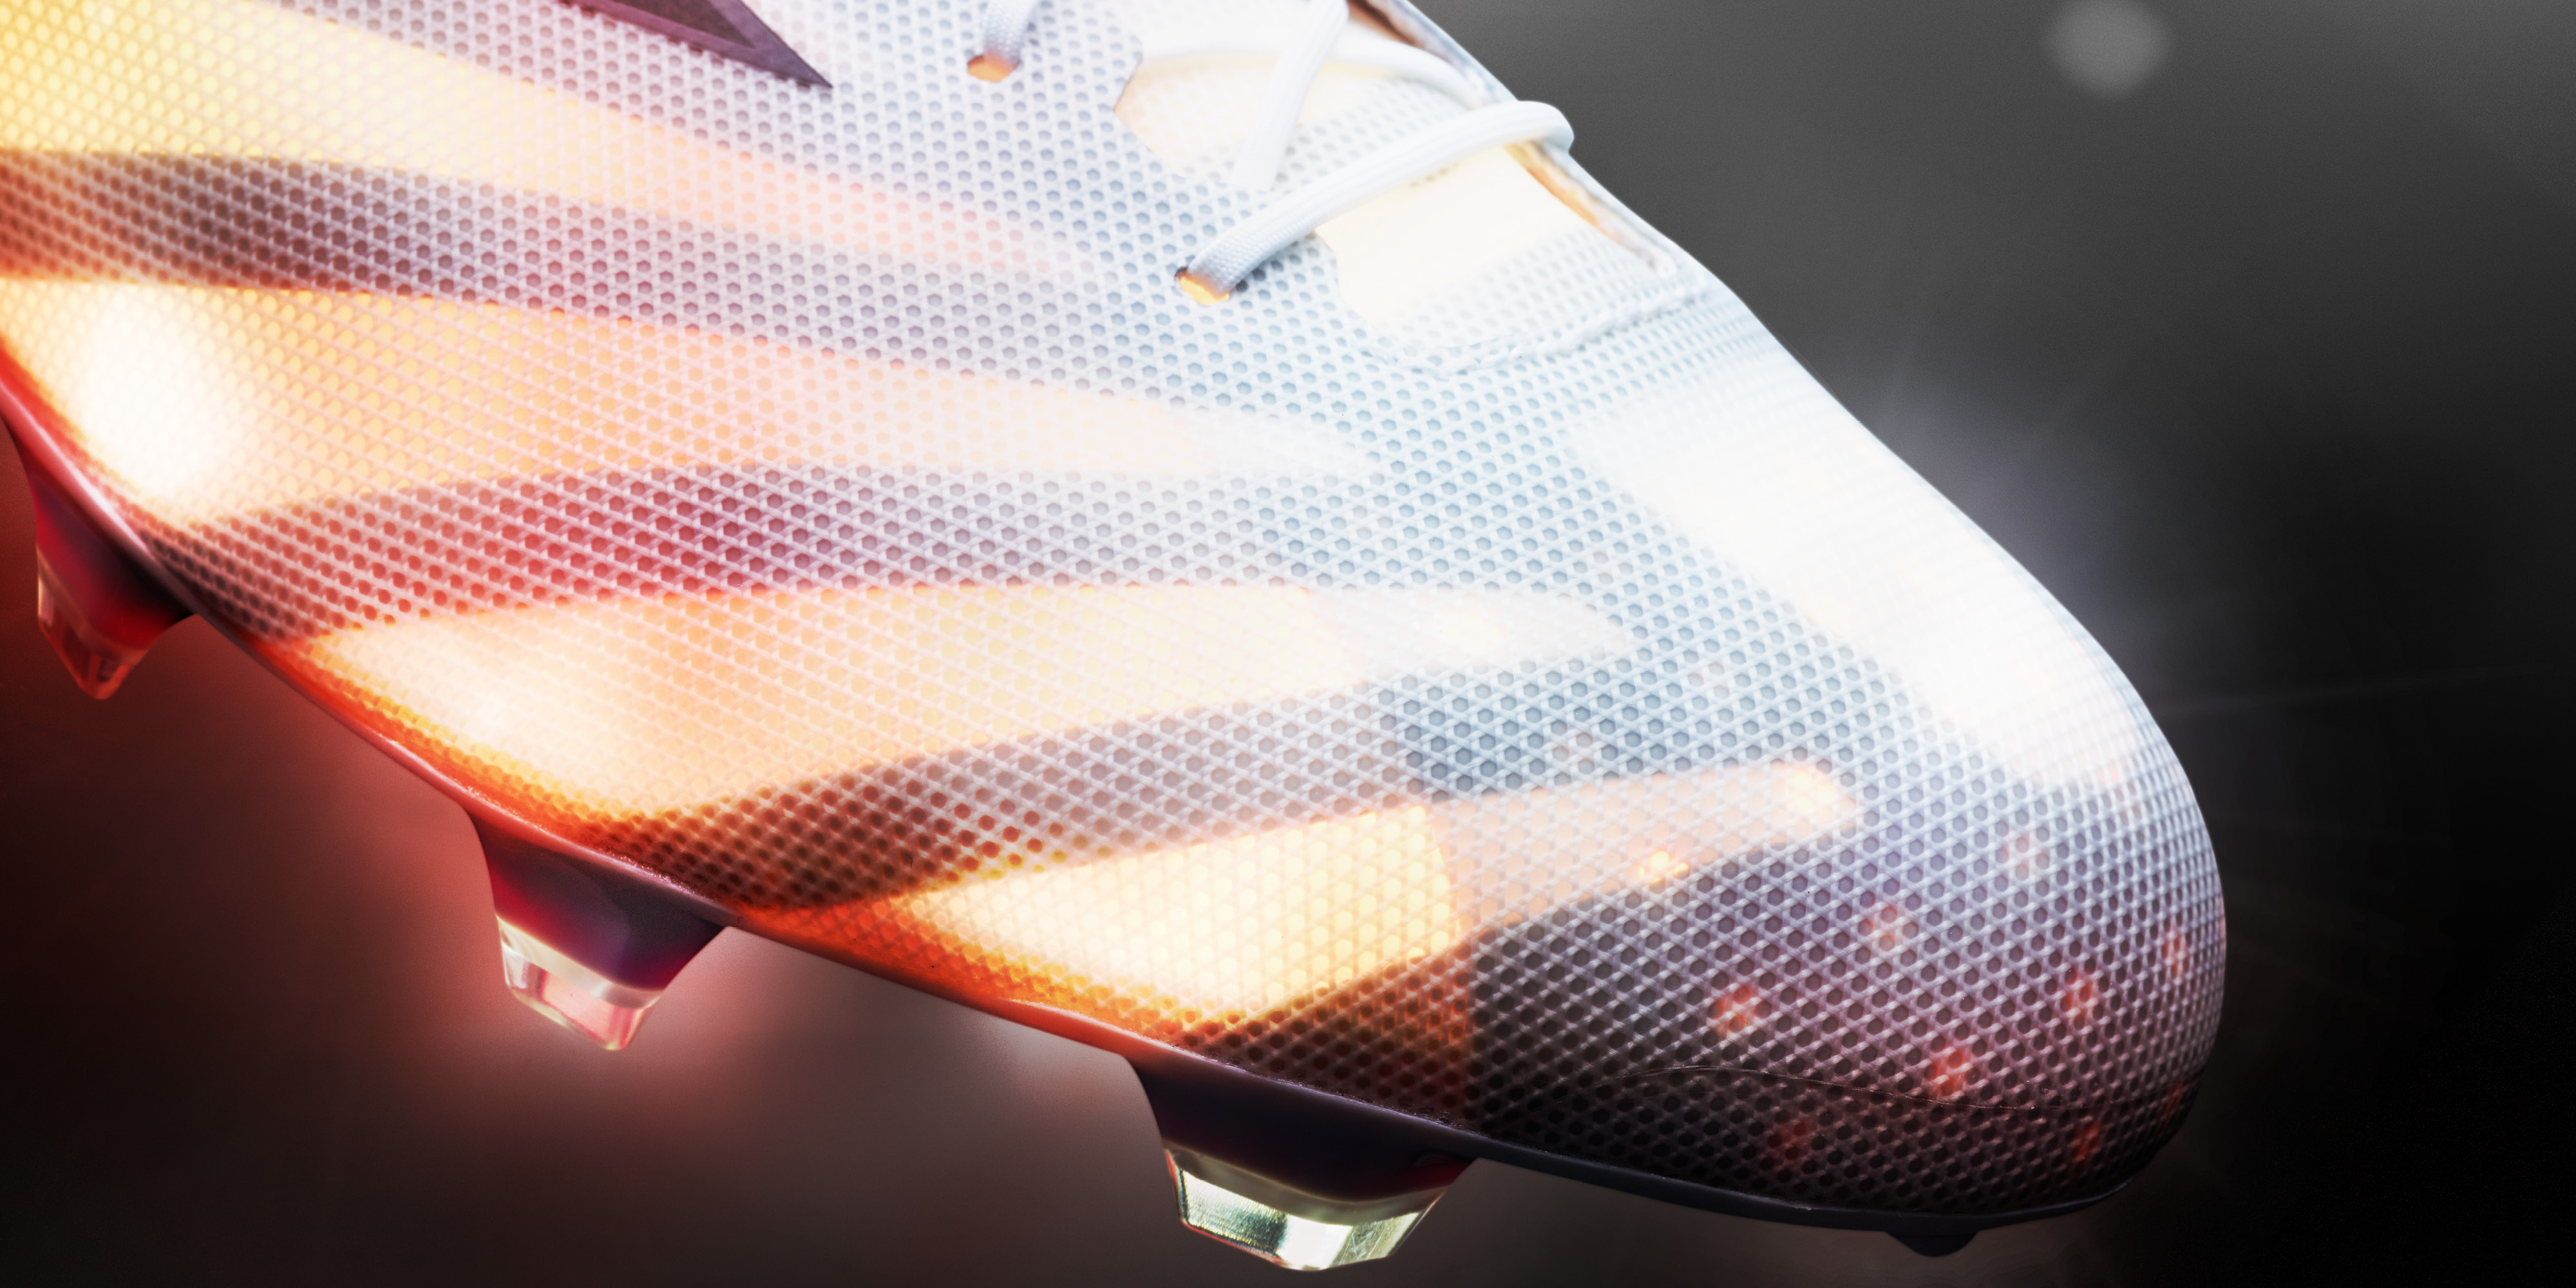 lightest soccer shoes